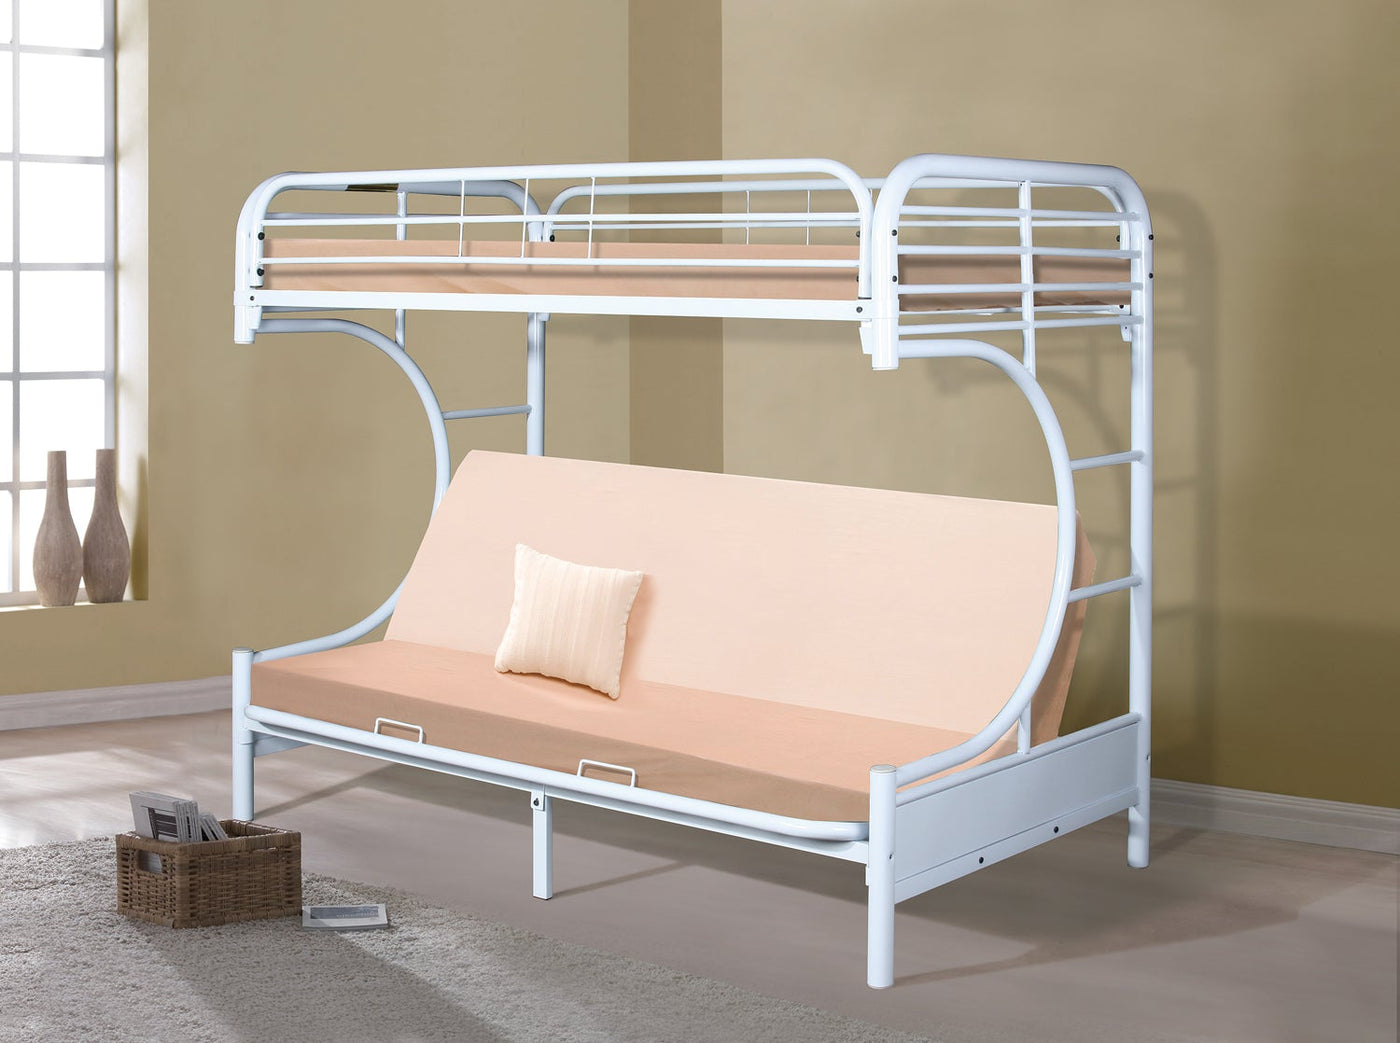 C-shaped Futon Bunk Bed